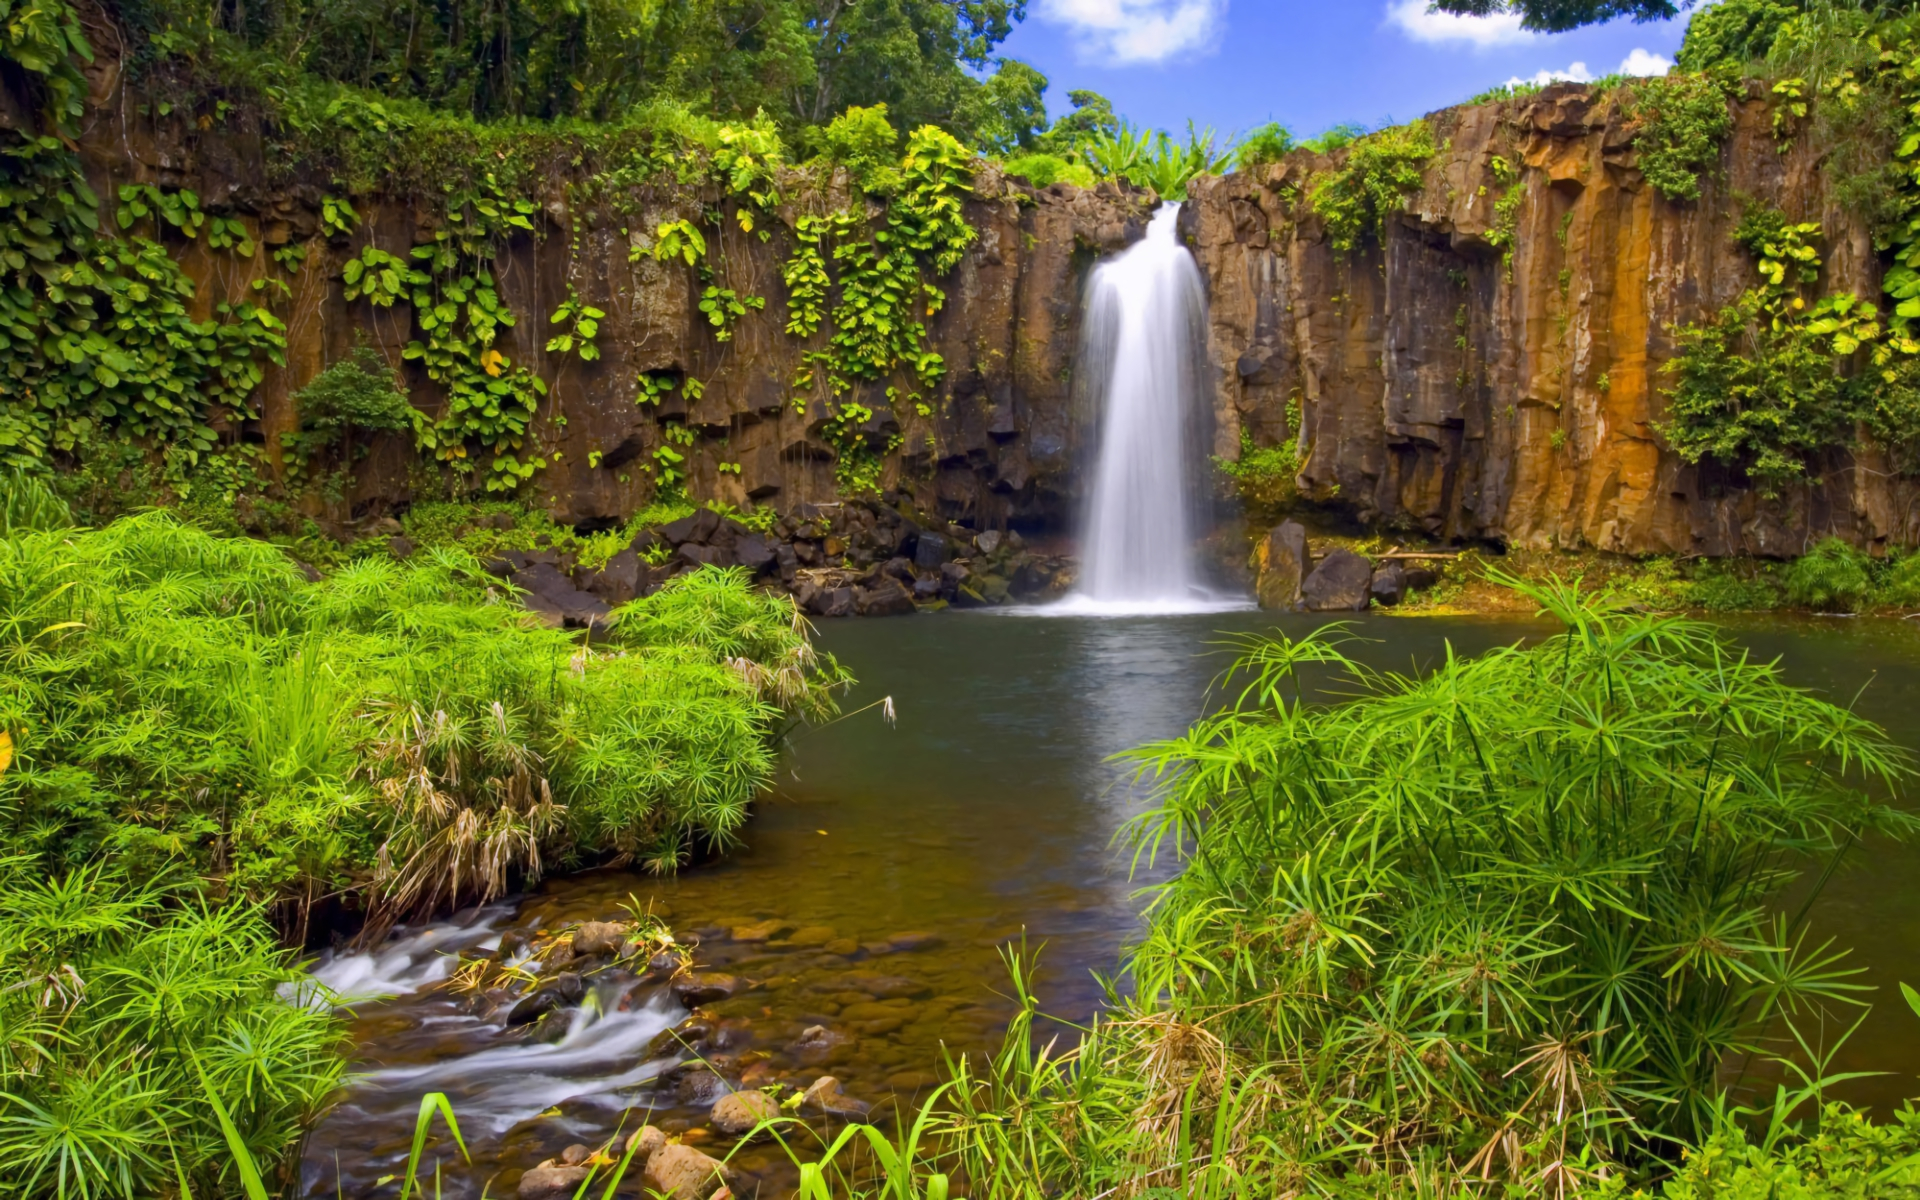 Обои на телефон живой водопад. Водопад. Красивая природа. Живая природа водопады. Заставки на телефон анимация природа.